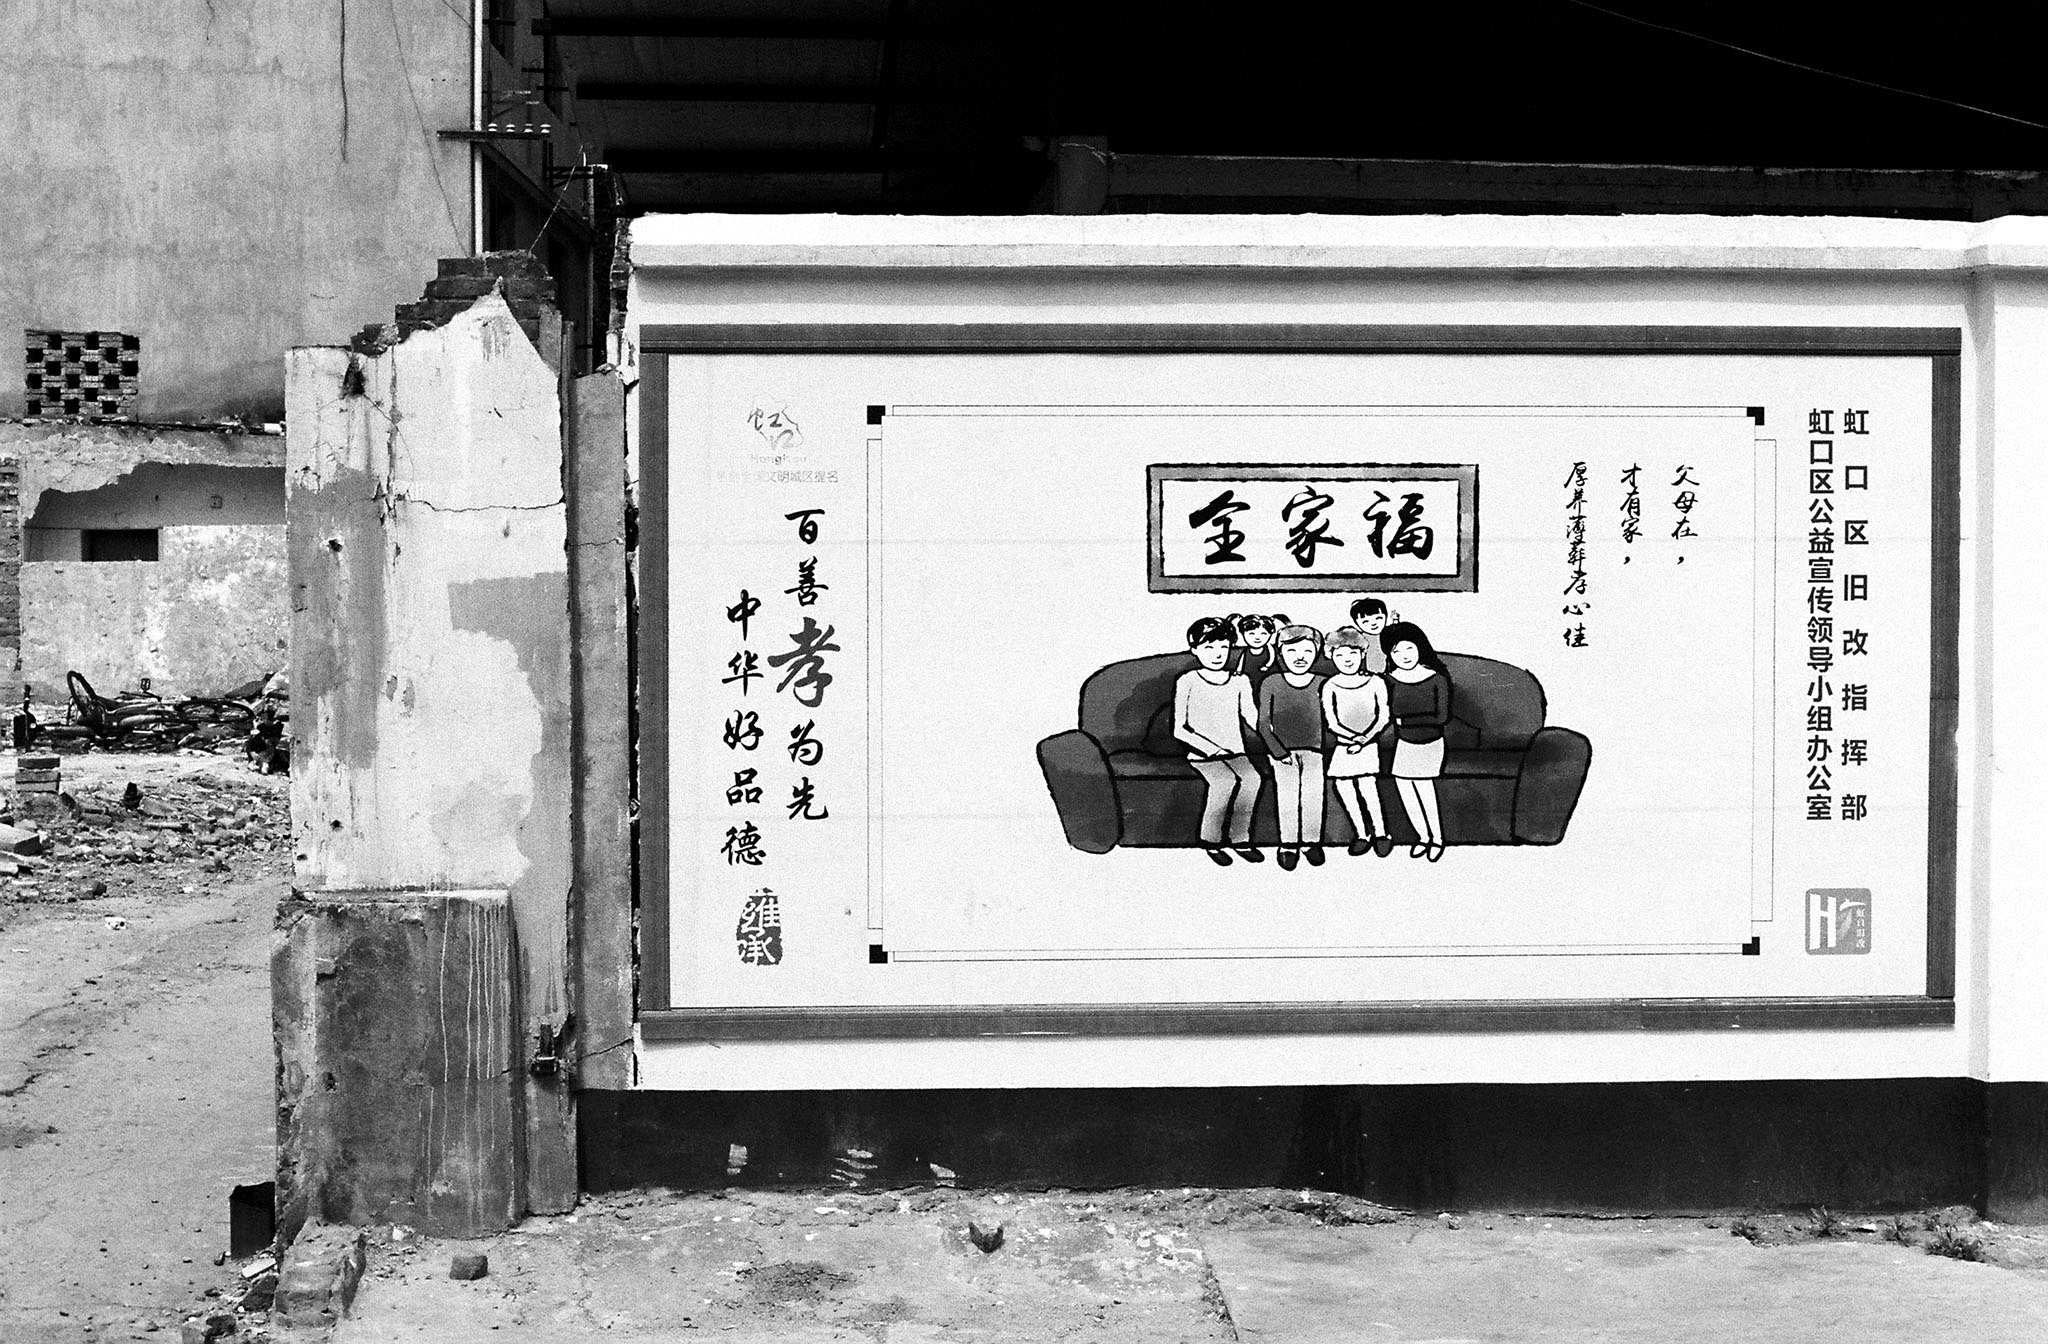 img/1804-china-shanghai-1933-work-nikonf/tat-tso-1804-china-shanghai-1933-work-nikonf-14.jpg